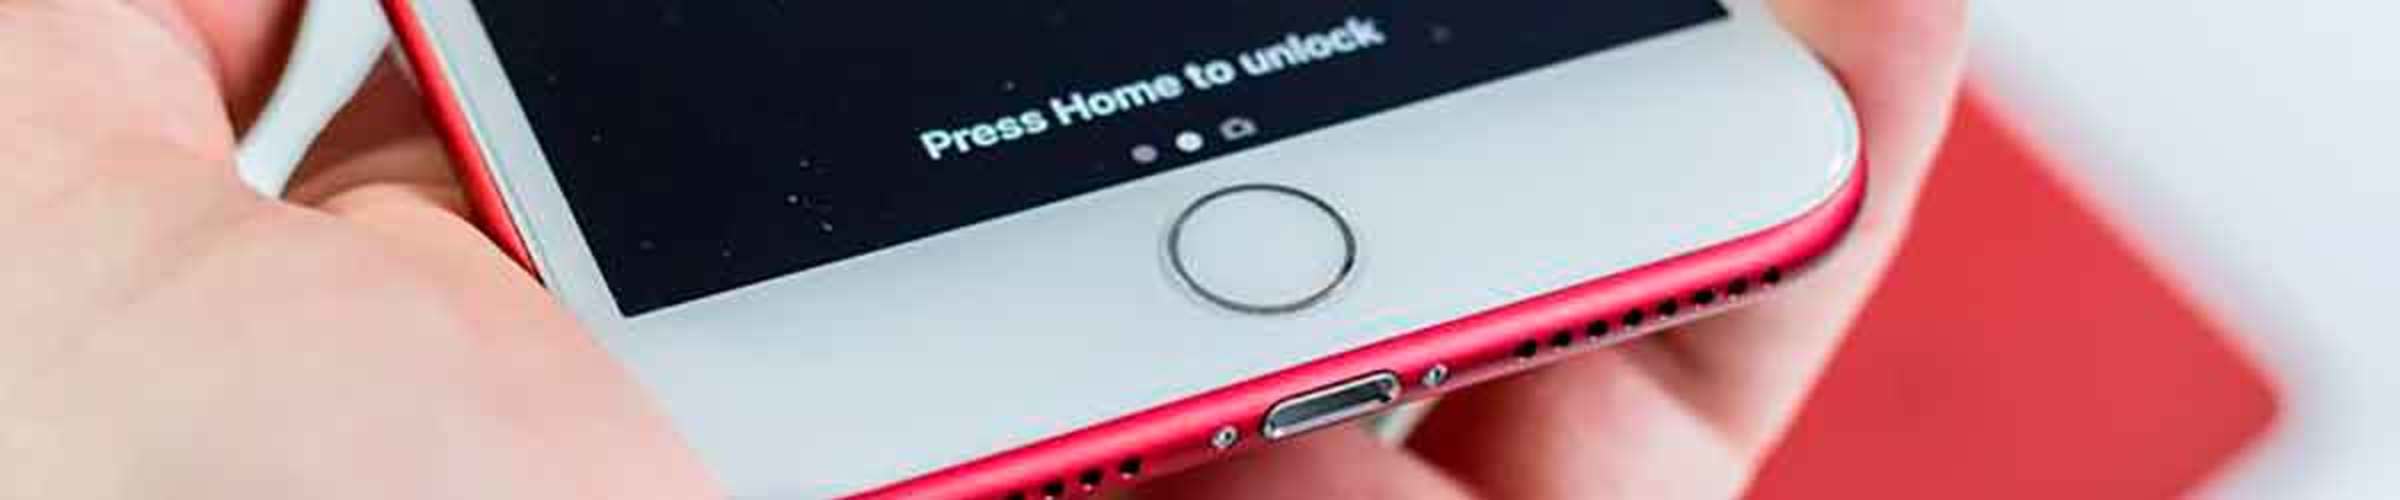 Как разблокировать iPhone-iPad без нажатия на кнопку Home